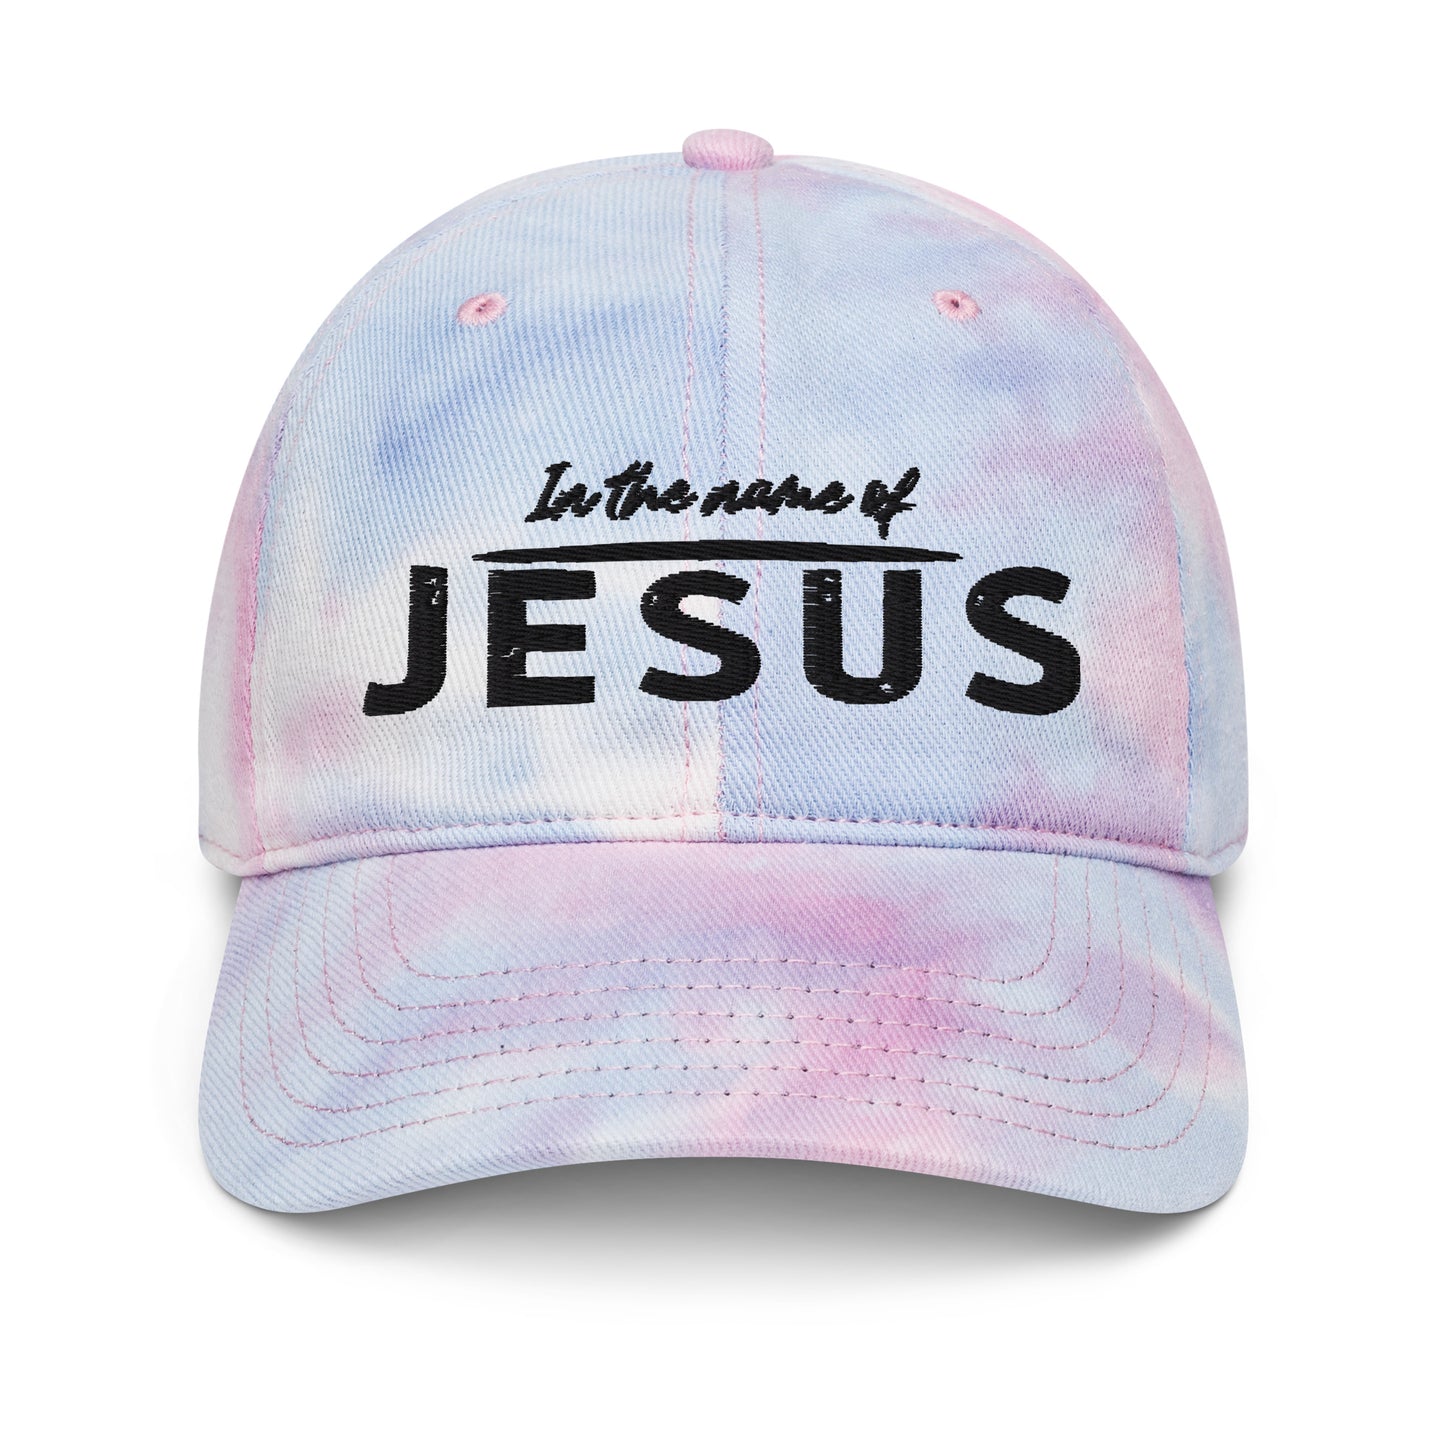 "In The Name Of Jesus" Tie dye hat